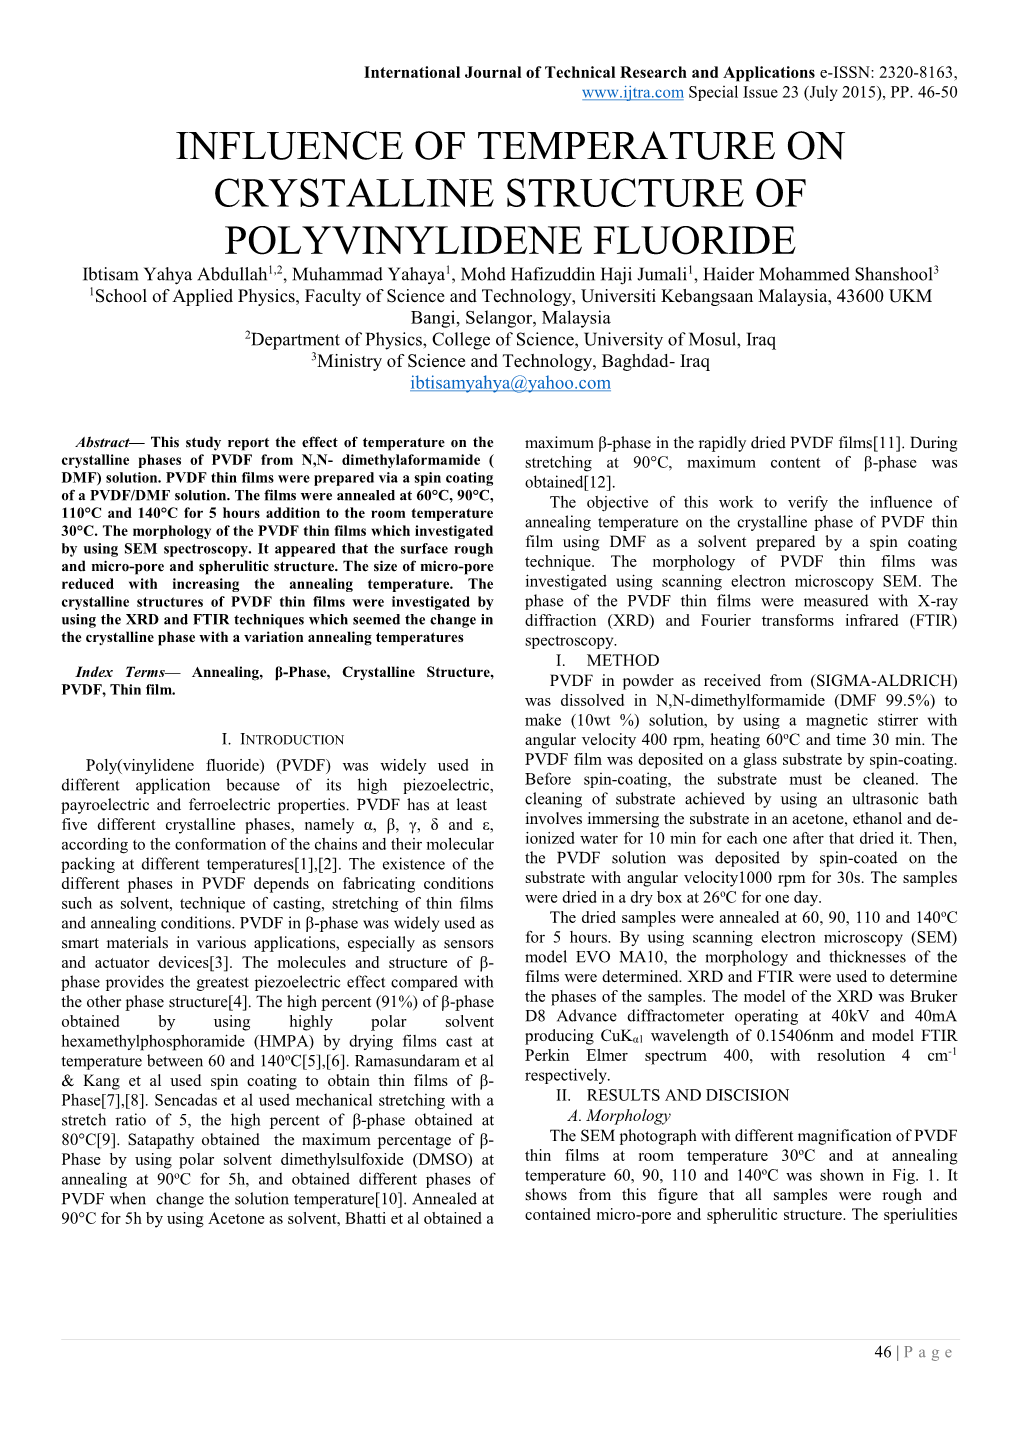 Influence of Temperature on Crystalline Structure of Polyvinylidene Fluoride